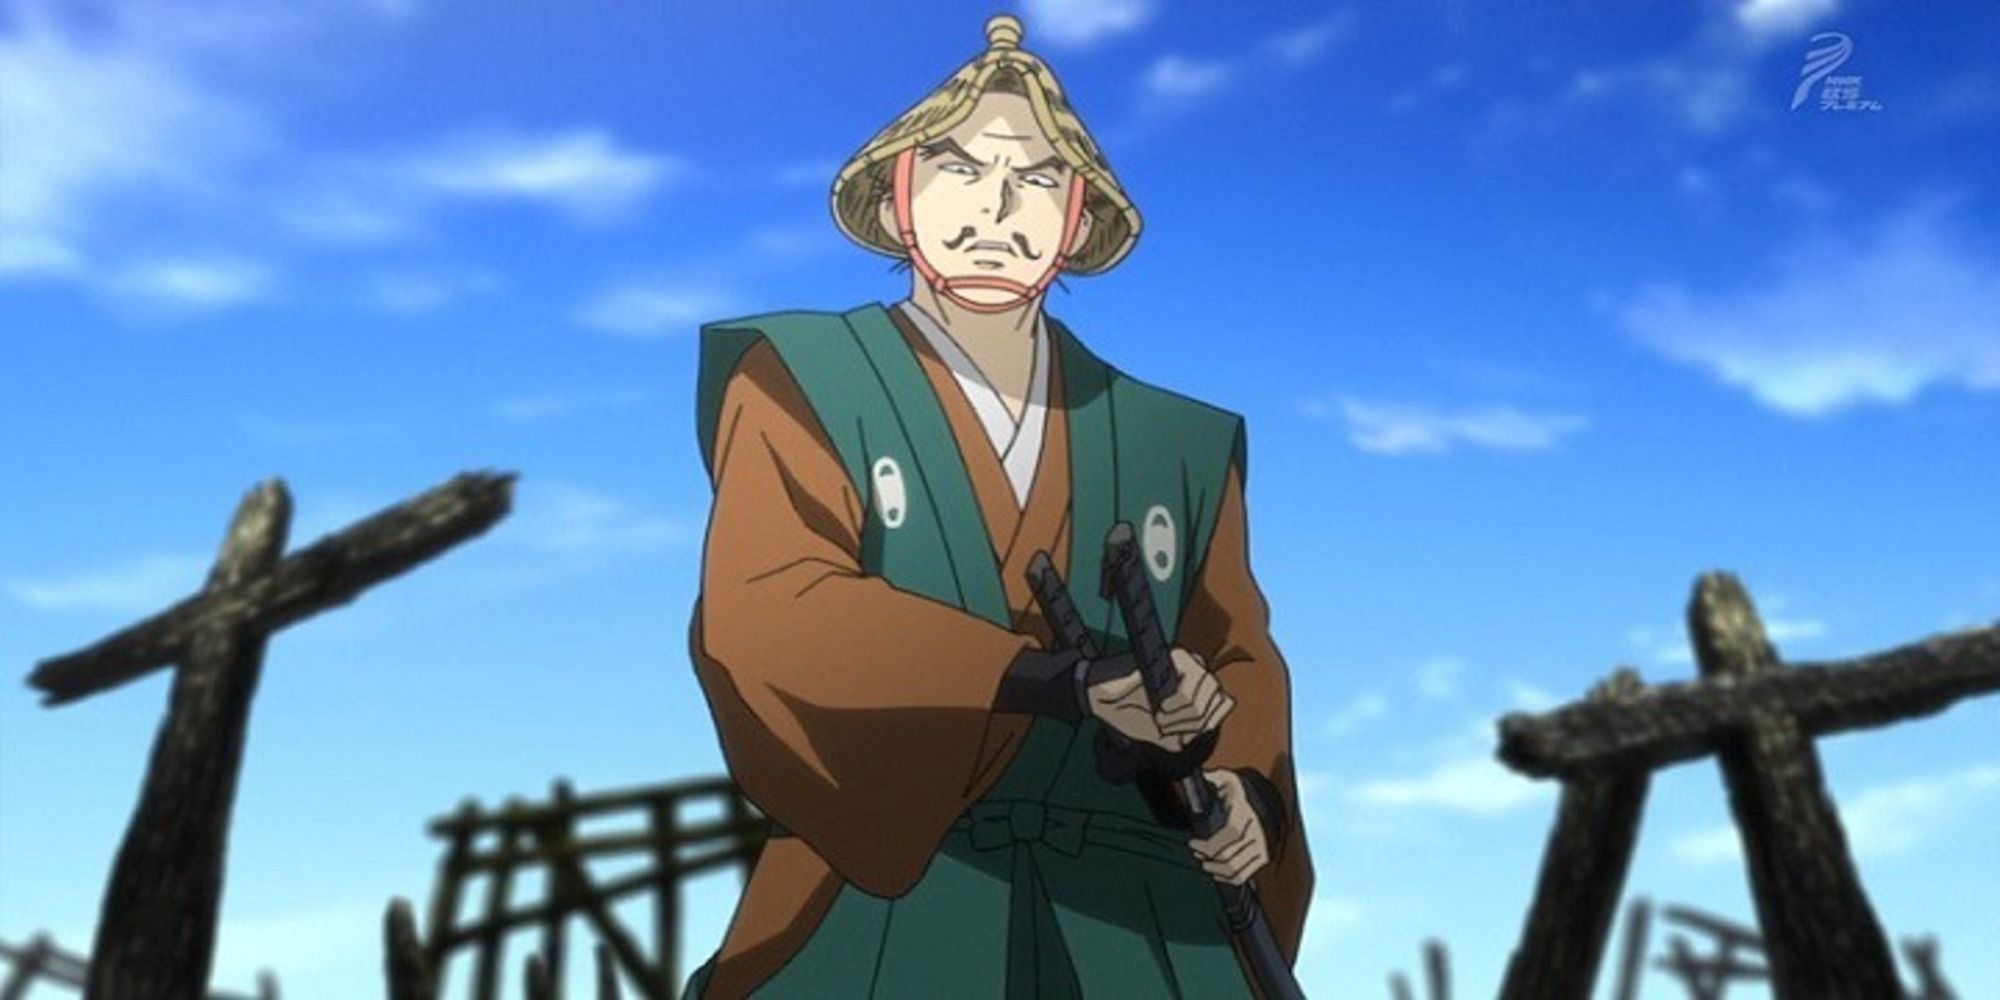 Hyouge Mono screnshot main character drawing his sword